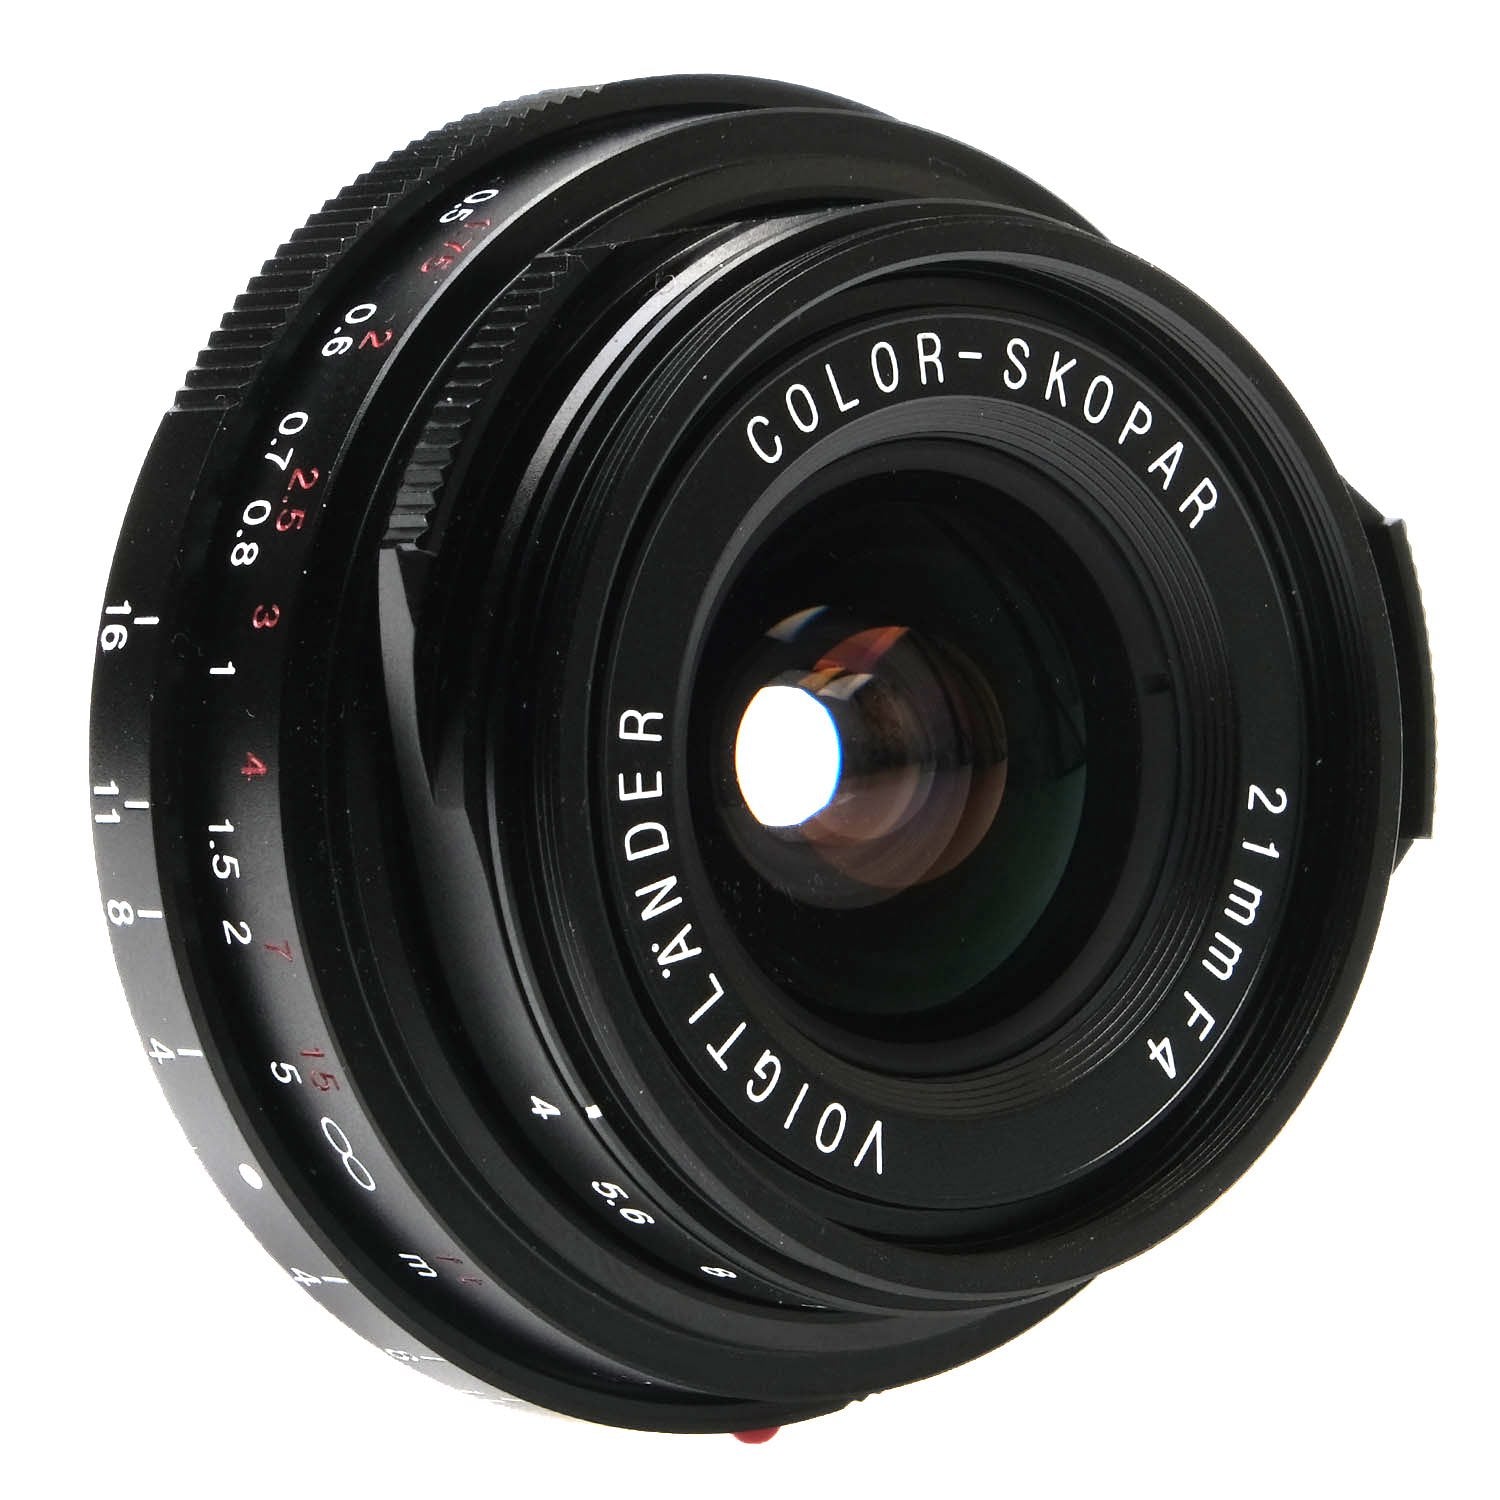 Voigtlander 21mm f4 Color Skopar, Black, Boxed 17154483 – Leica 